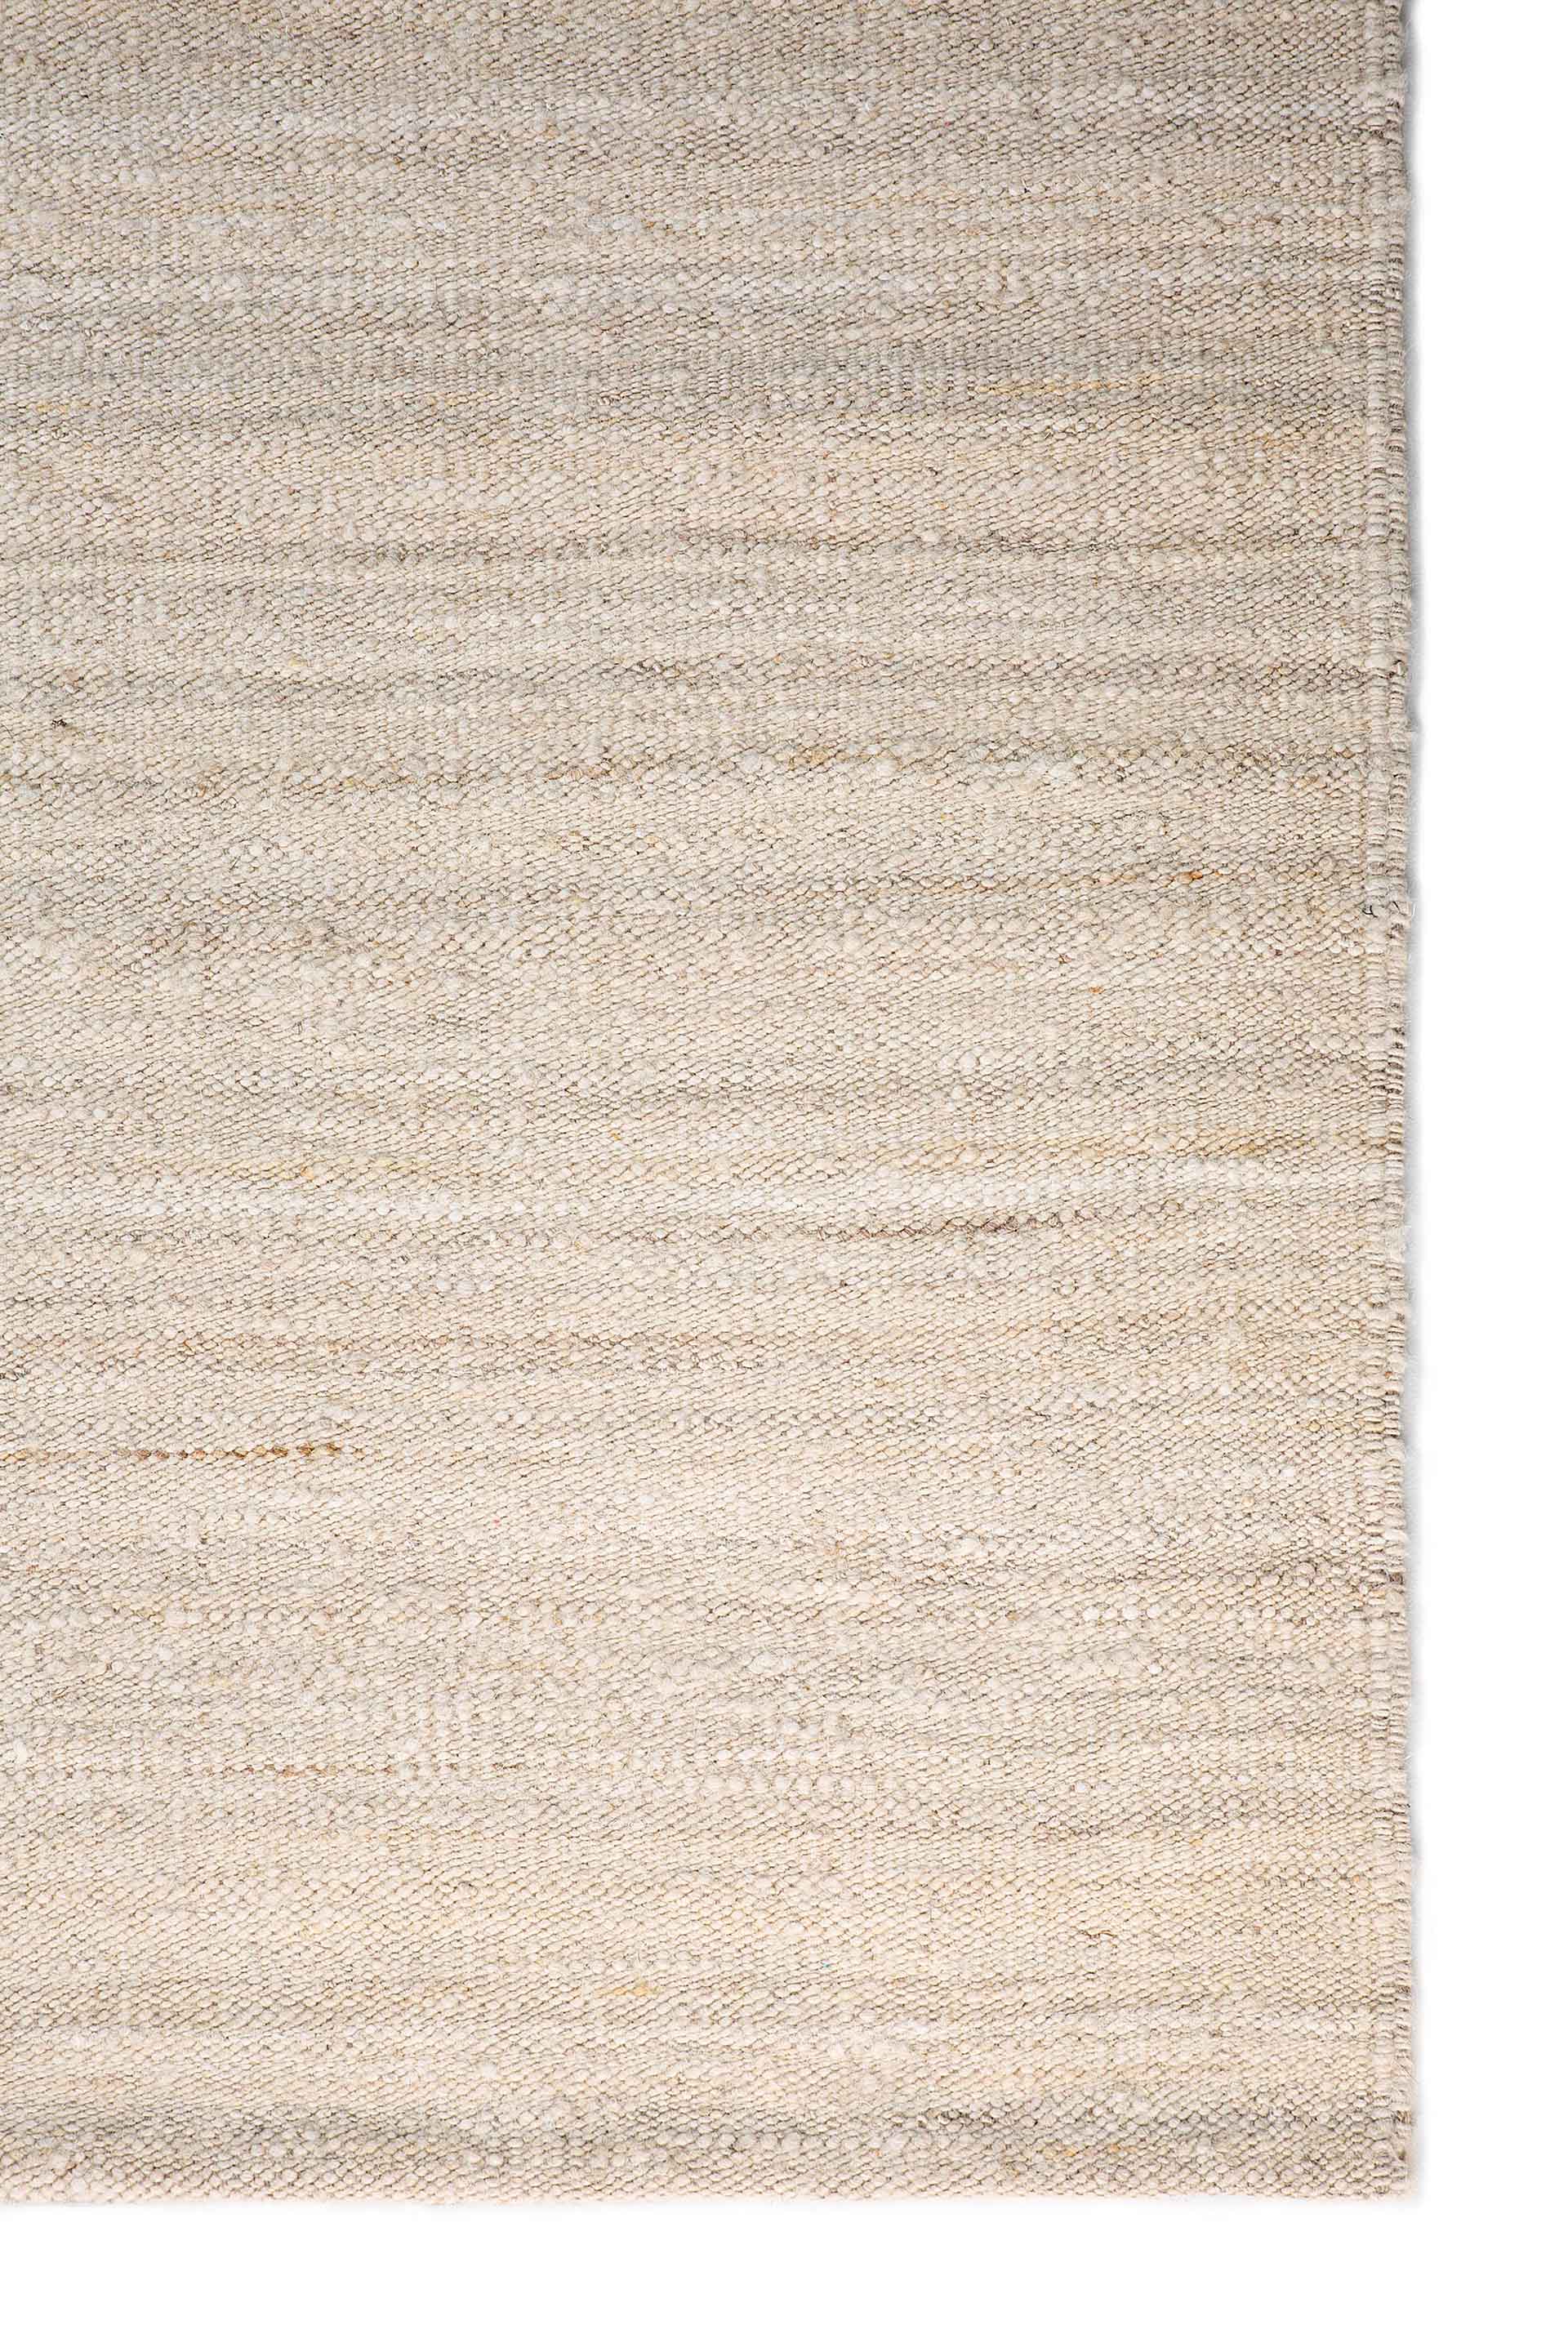 Ethnicraft - Nomad Sand kilim tapijt (170 x 240 x 1 cm)